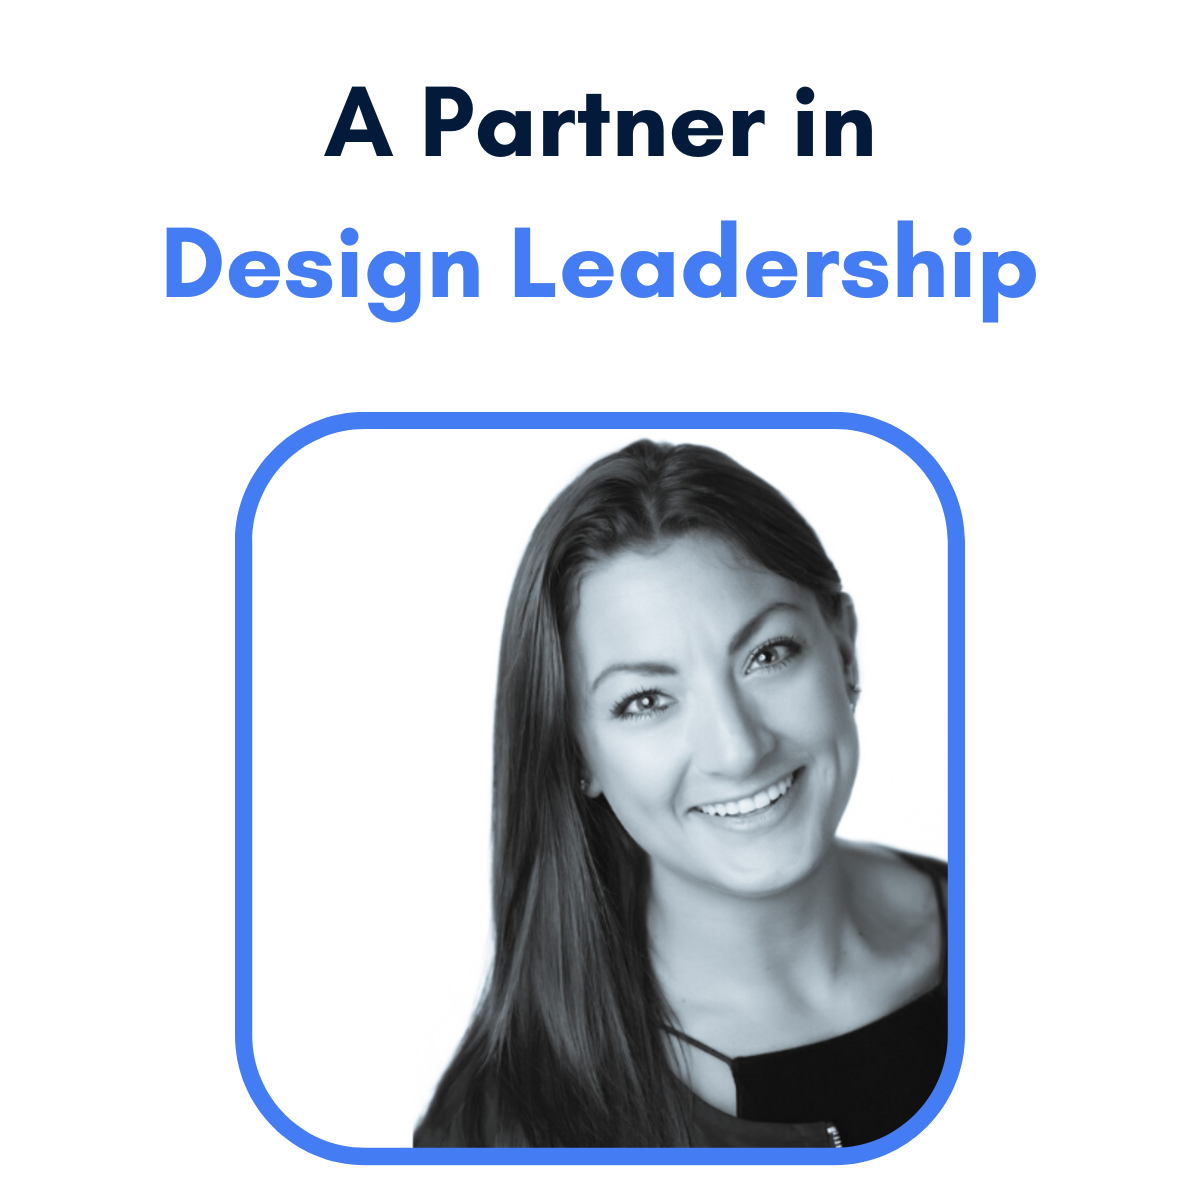 A Partner in Design Leadership